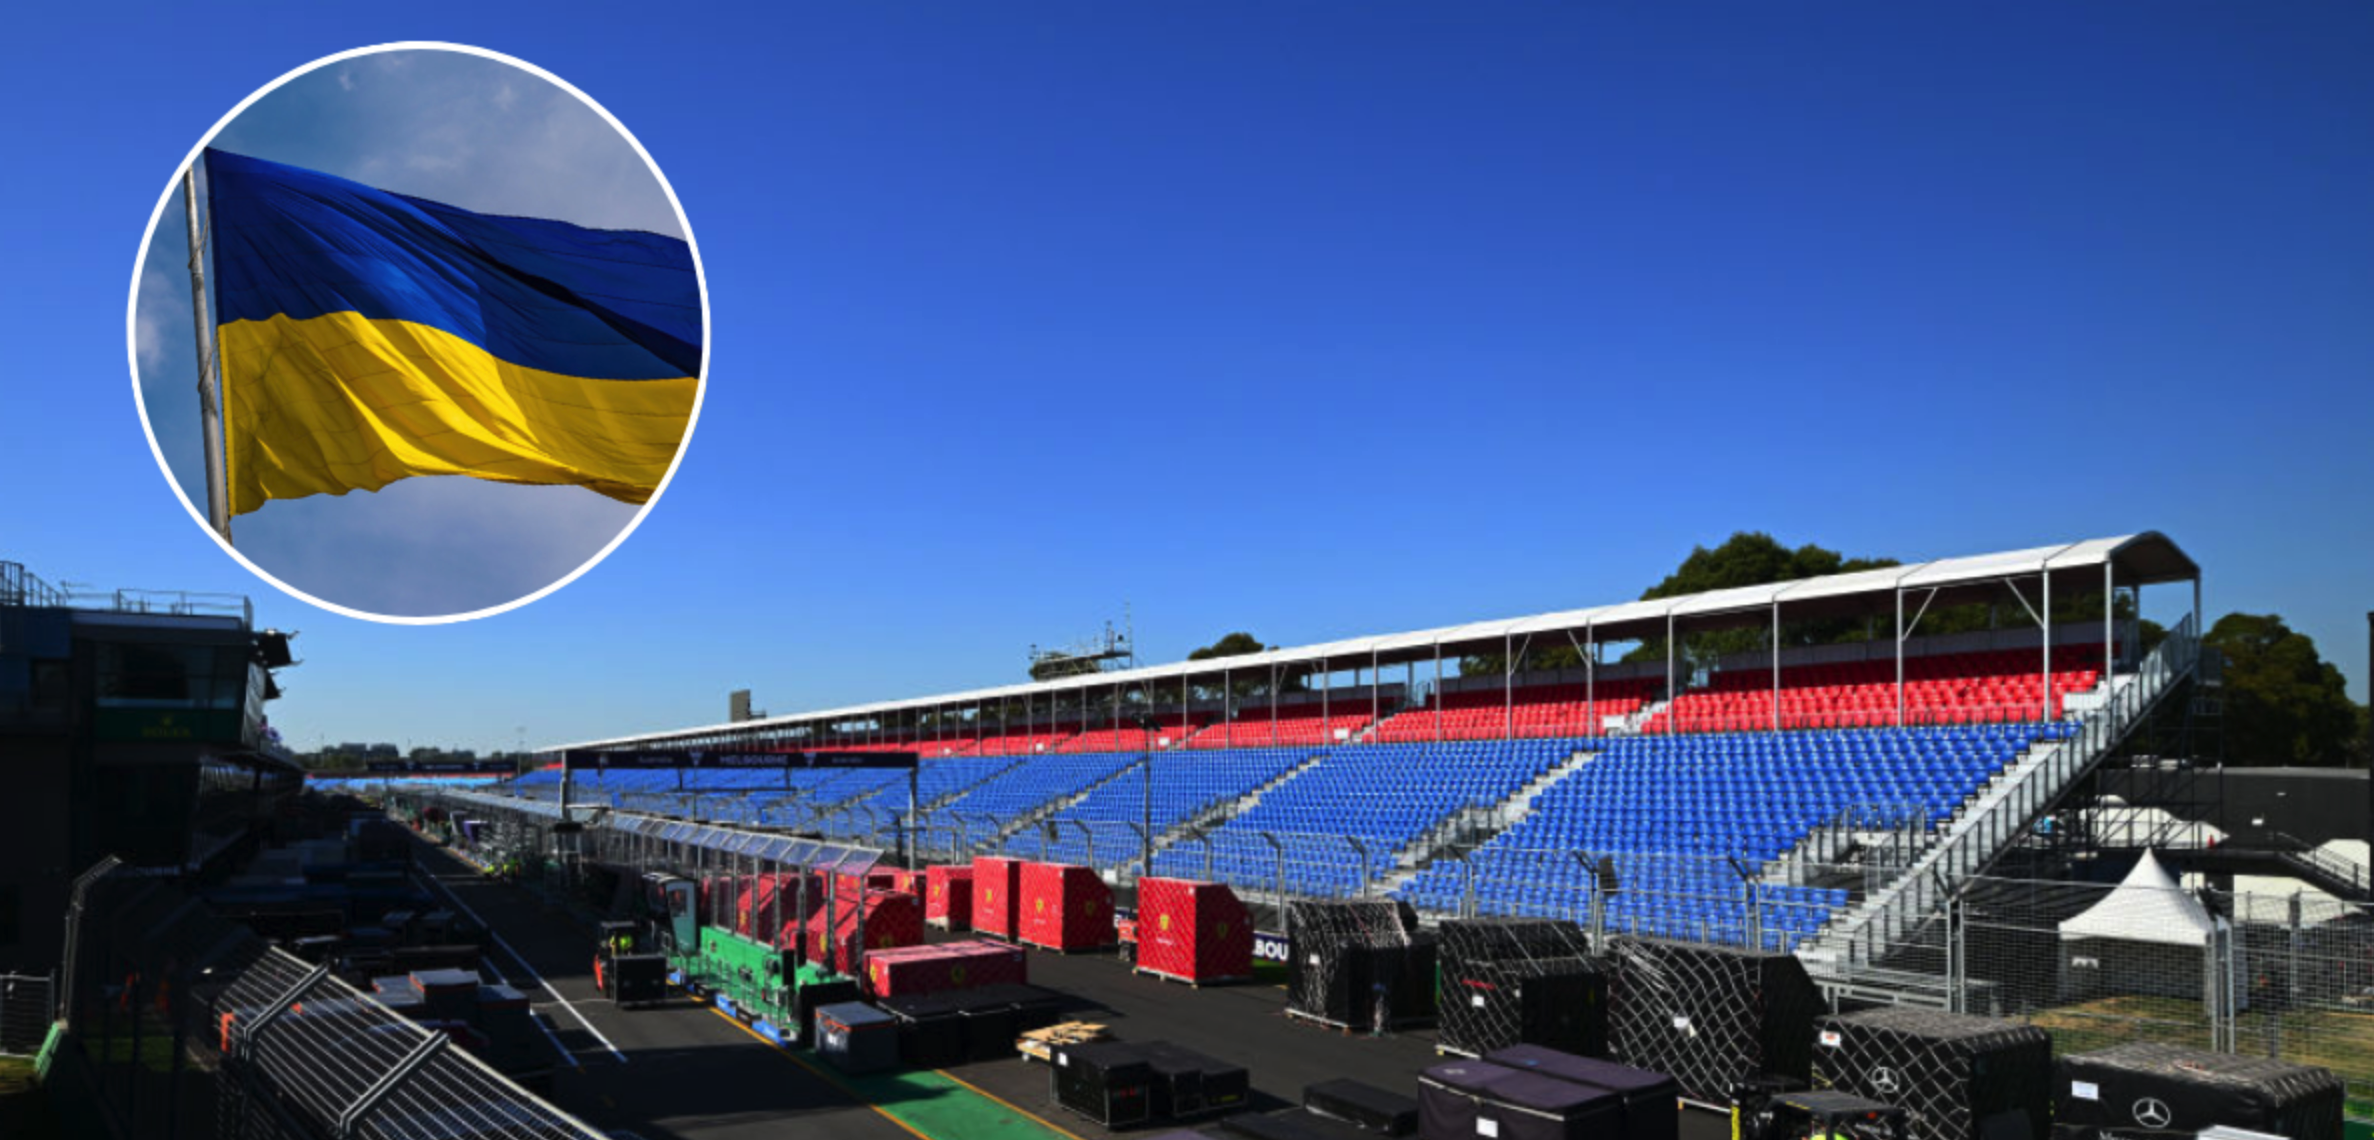 The Grand Prix Australia bans Ukrainian flag, Ukrainian community outraged